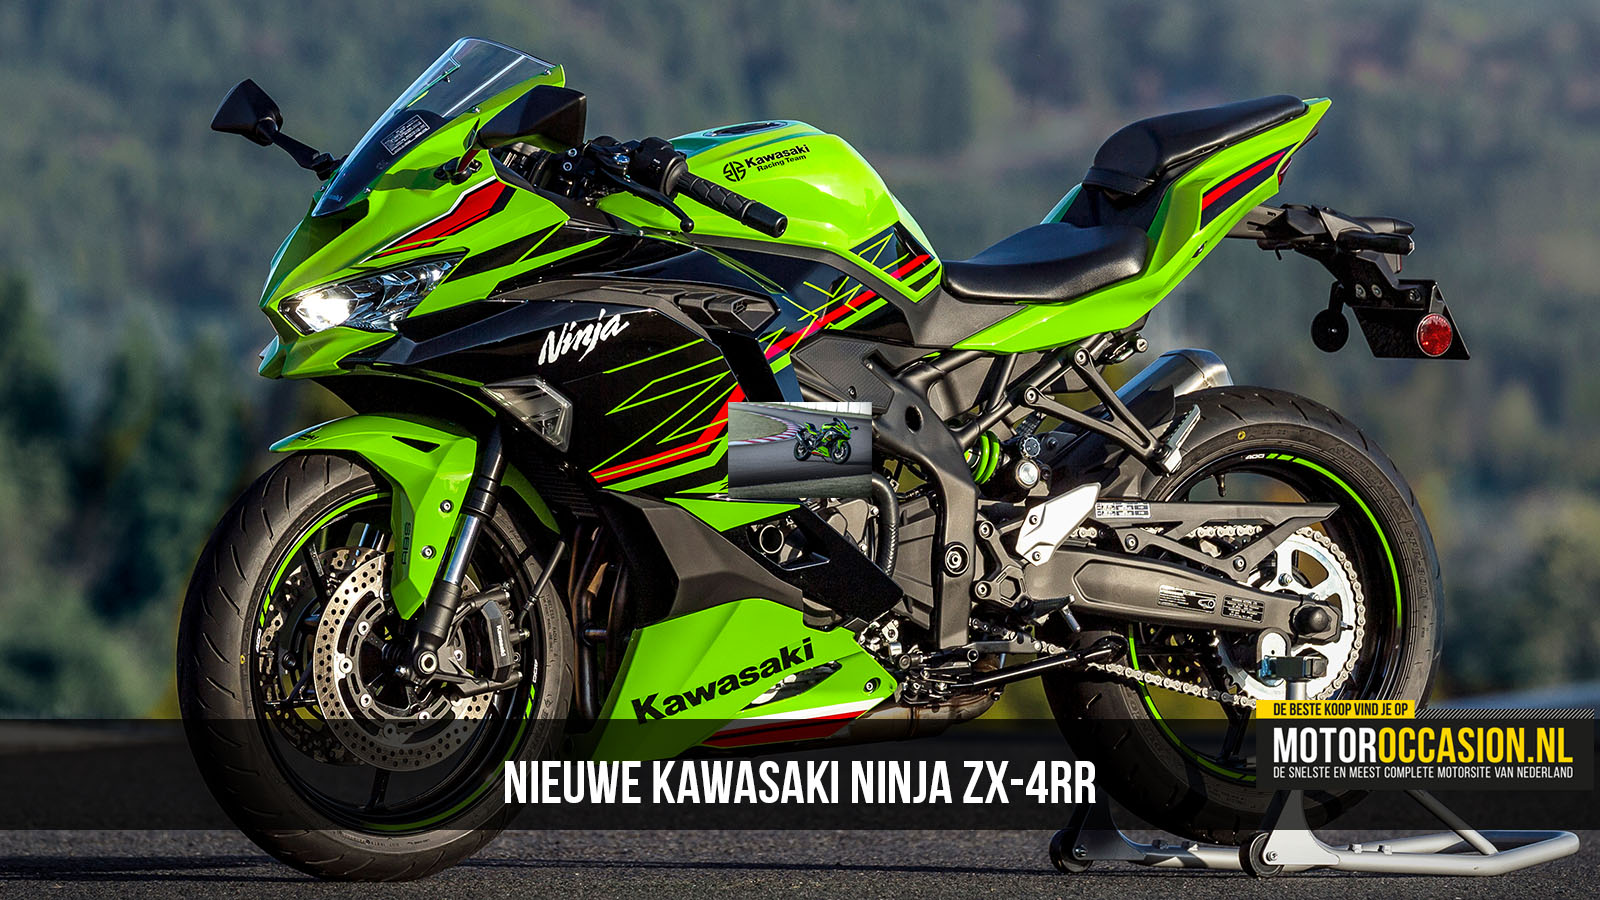 Motoroccasion.nl, Kawasaki onthult nieuwe Ninja ZX-4R viercilinder 